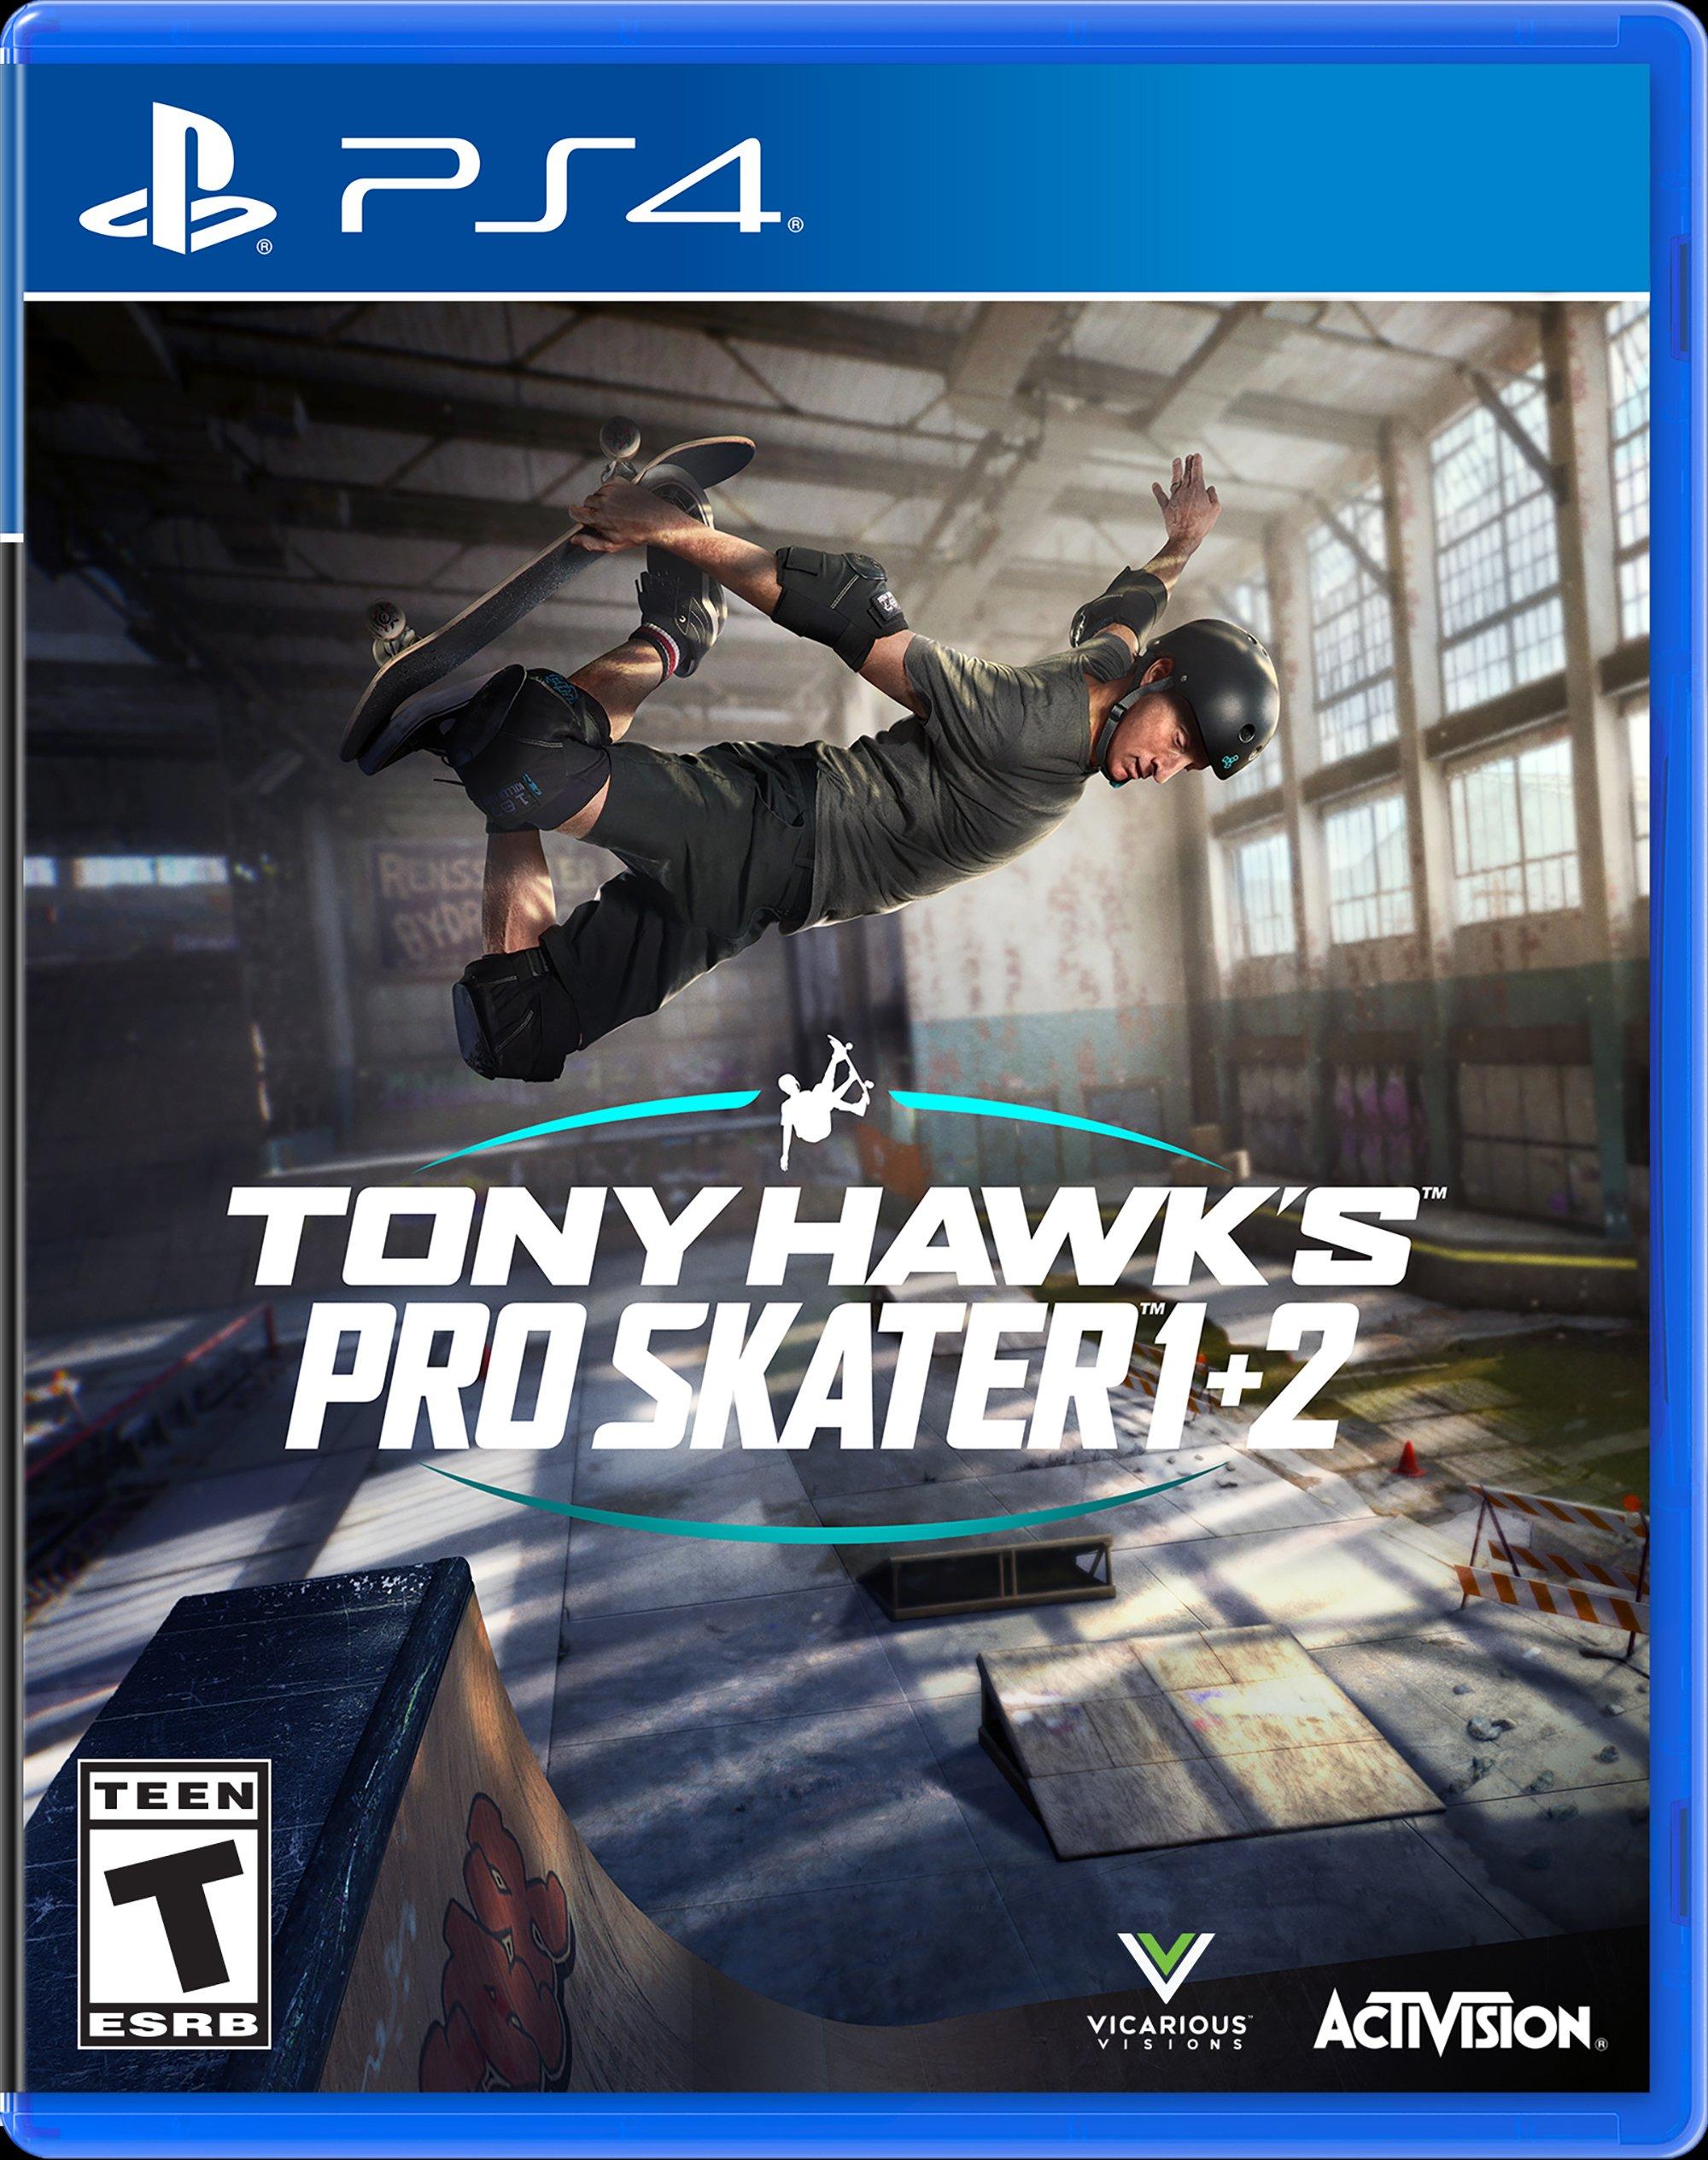 Jogamos: Tony Hawk's Pro Skater 1+2 (Remaster)